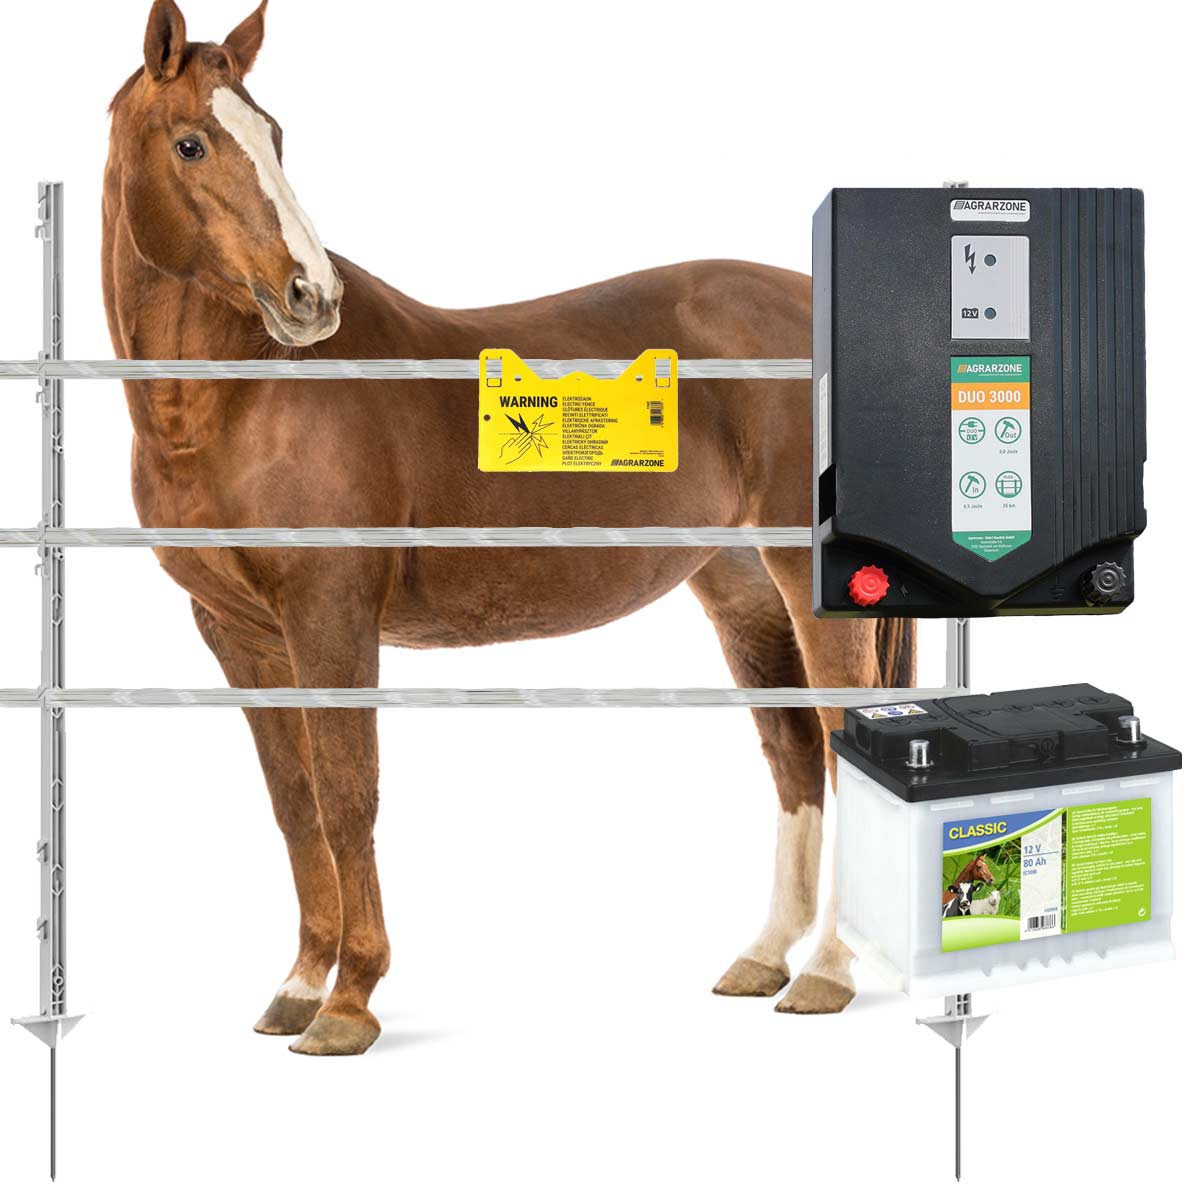 Agrarzone kit recinto elettrico per cavalli DUO 3000 a batteria 12V / 230 V, 4,5J, nastro 1200m